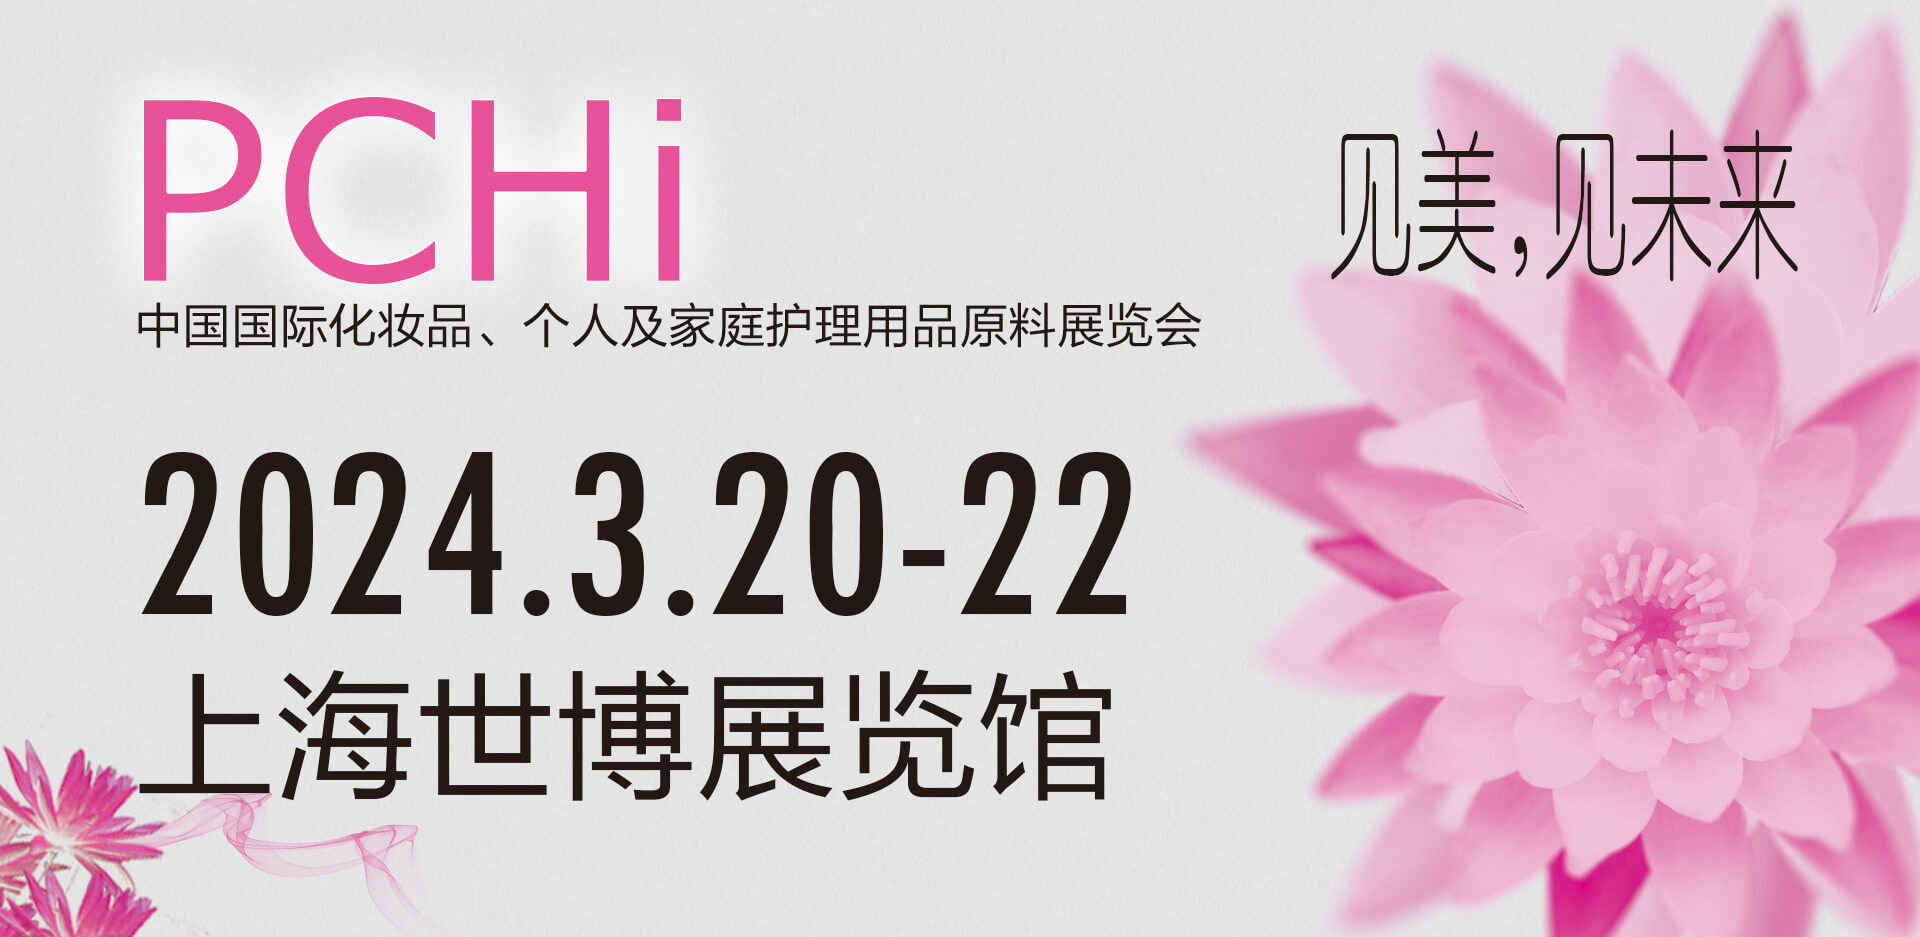 HUAYI BIO will go to Shanghai for PCHI 2024